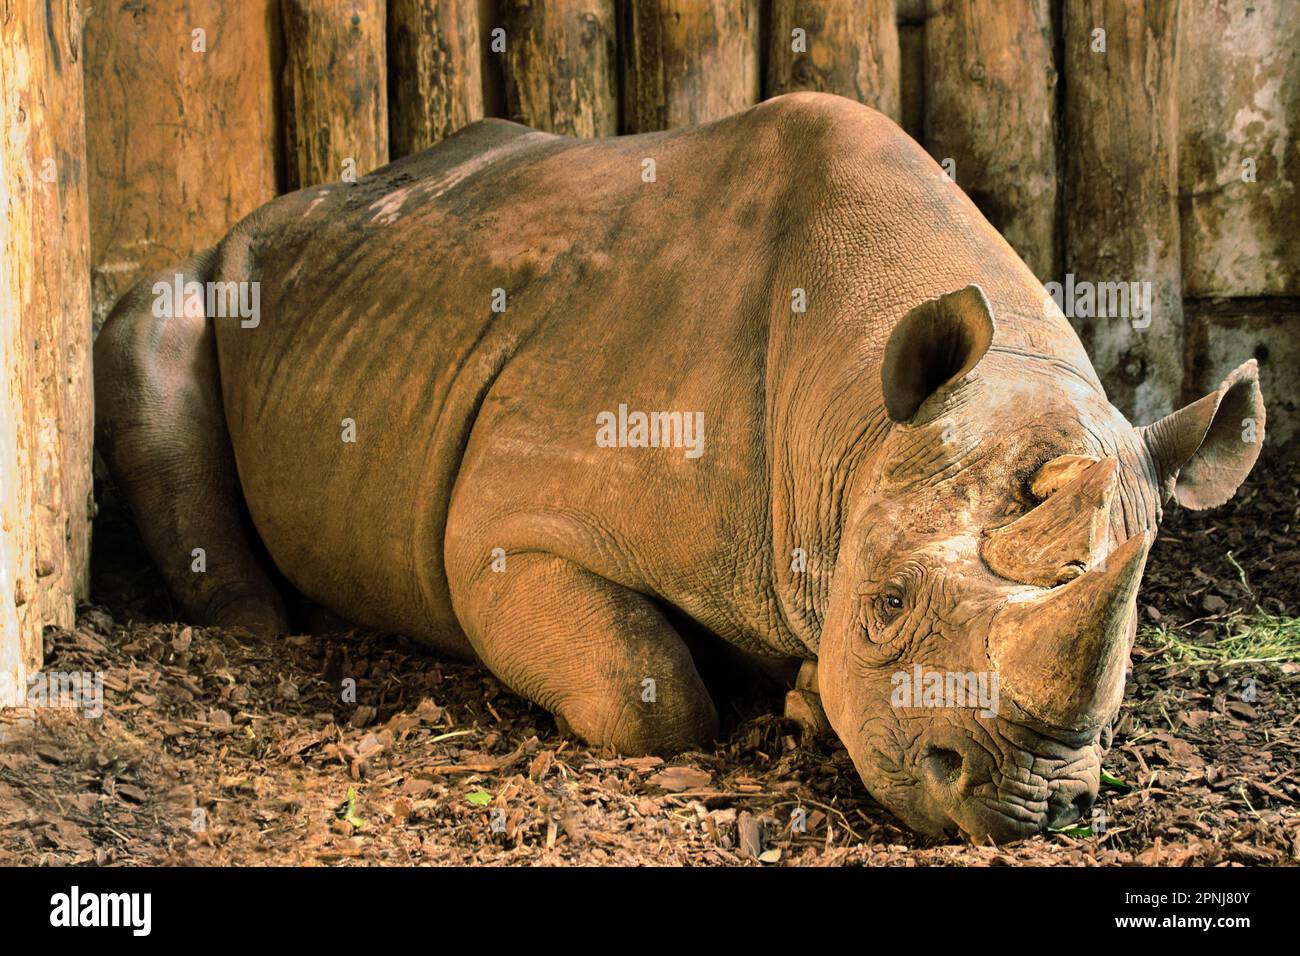 Black Rhinoceros. IUCN Conservation Status - Critically Endangered. Stock Photo